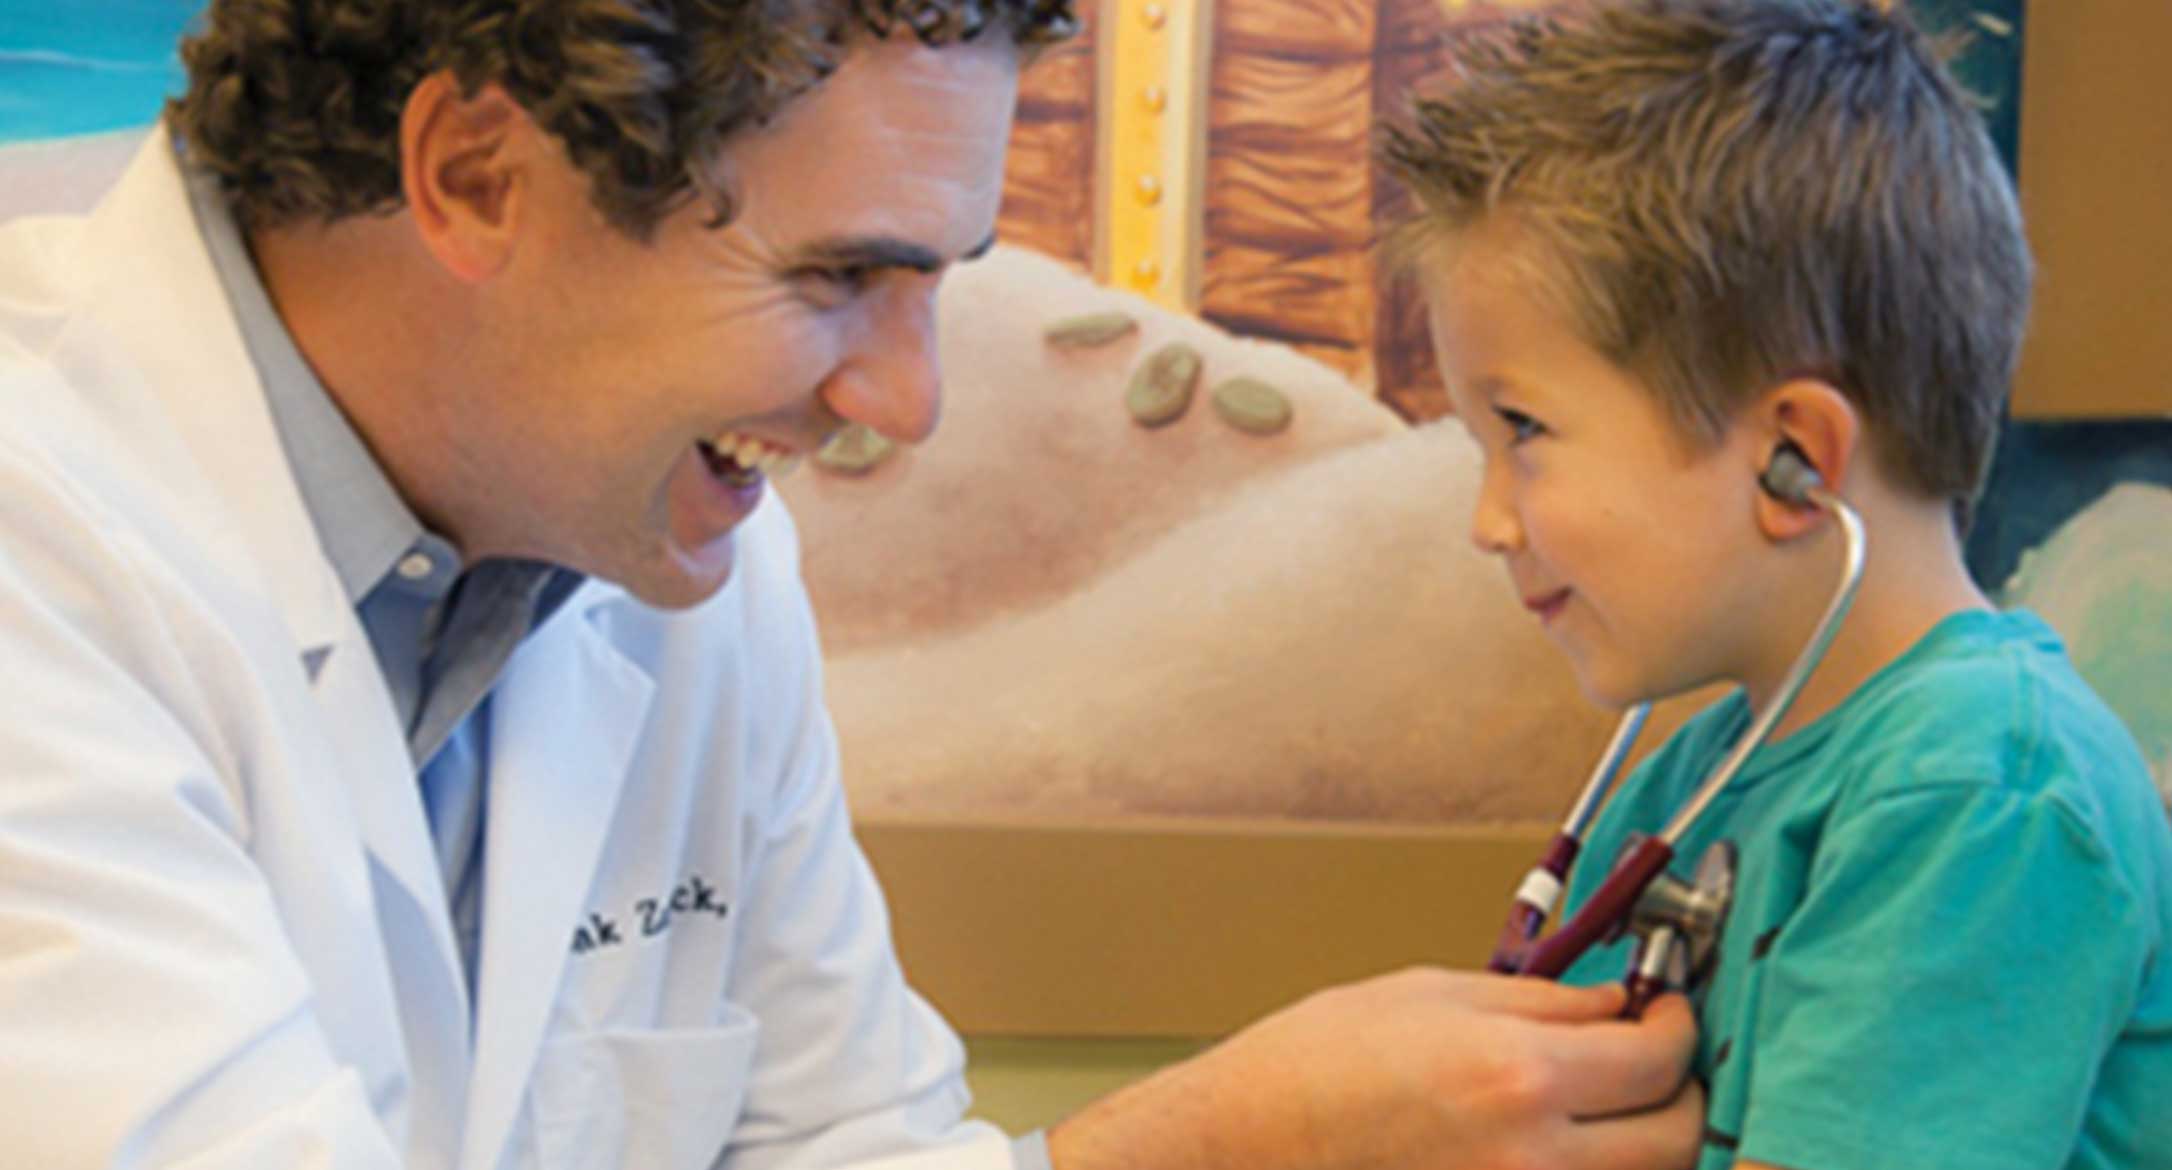 Pediatrician Dr. Zak Zarbock examining a child patient